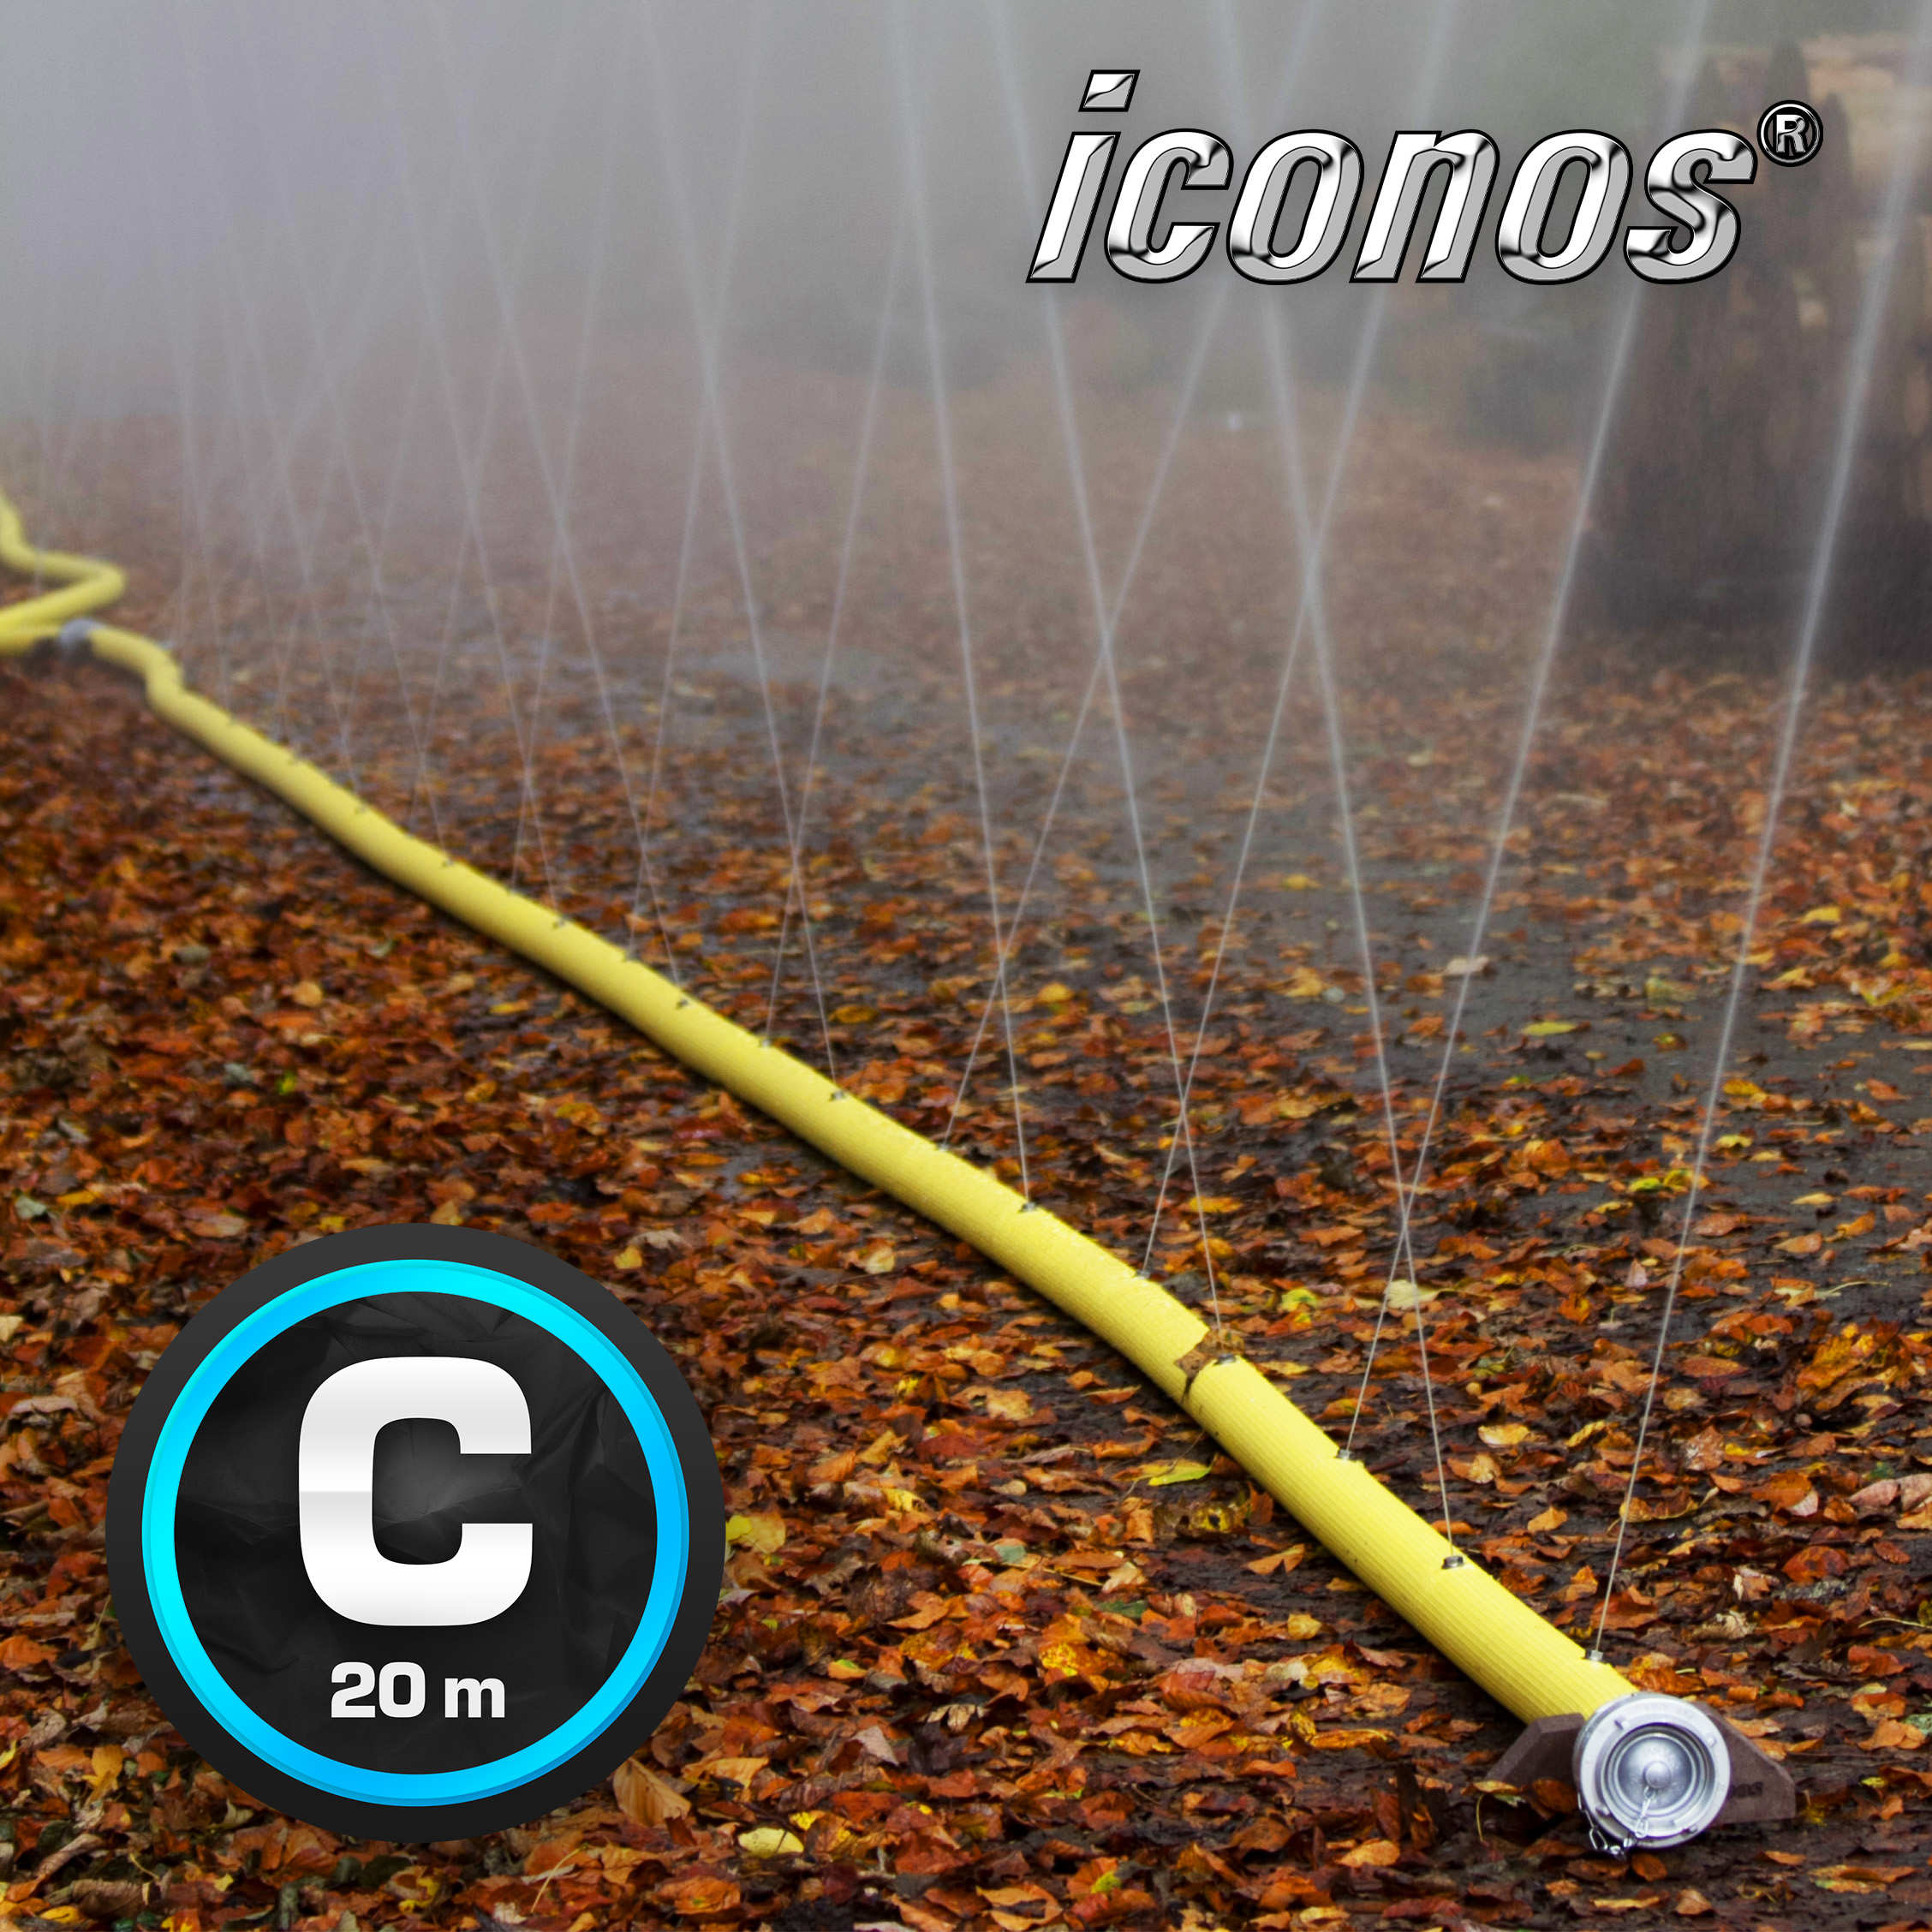 Clonová hadice ICONOS C52 20m